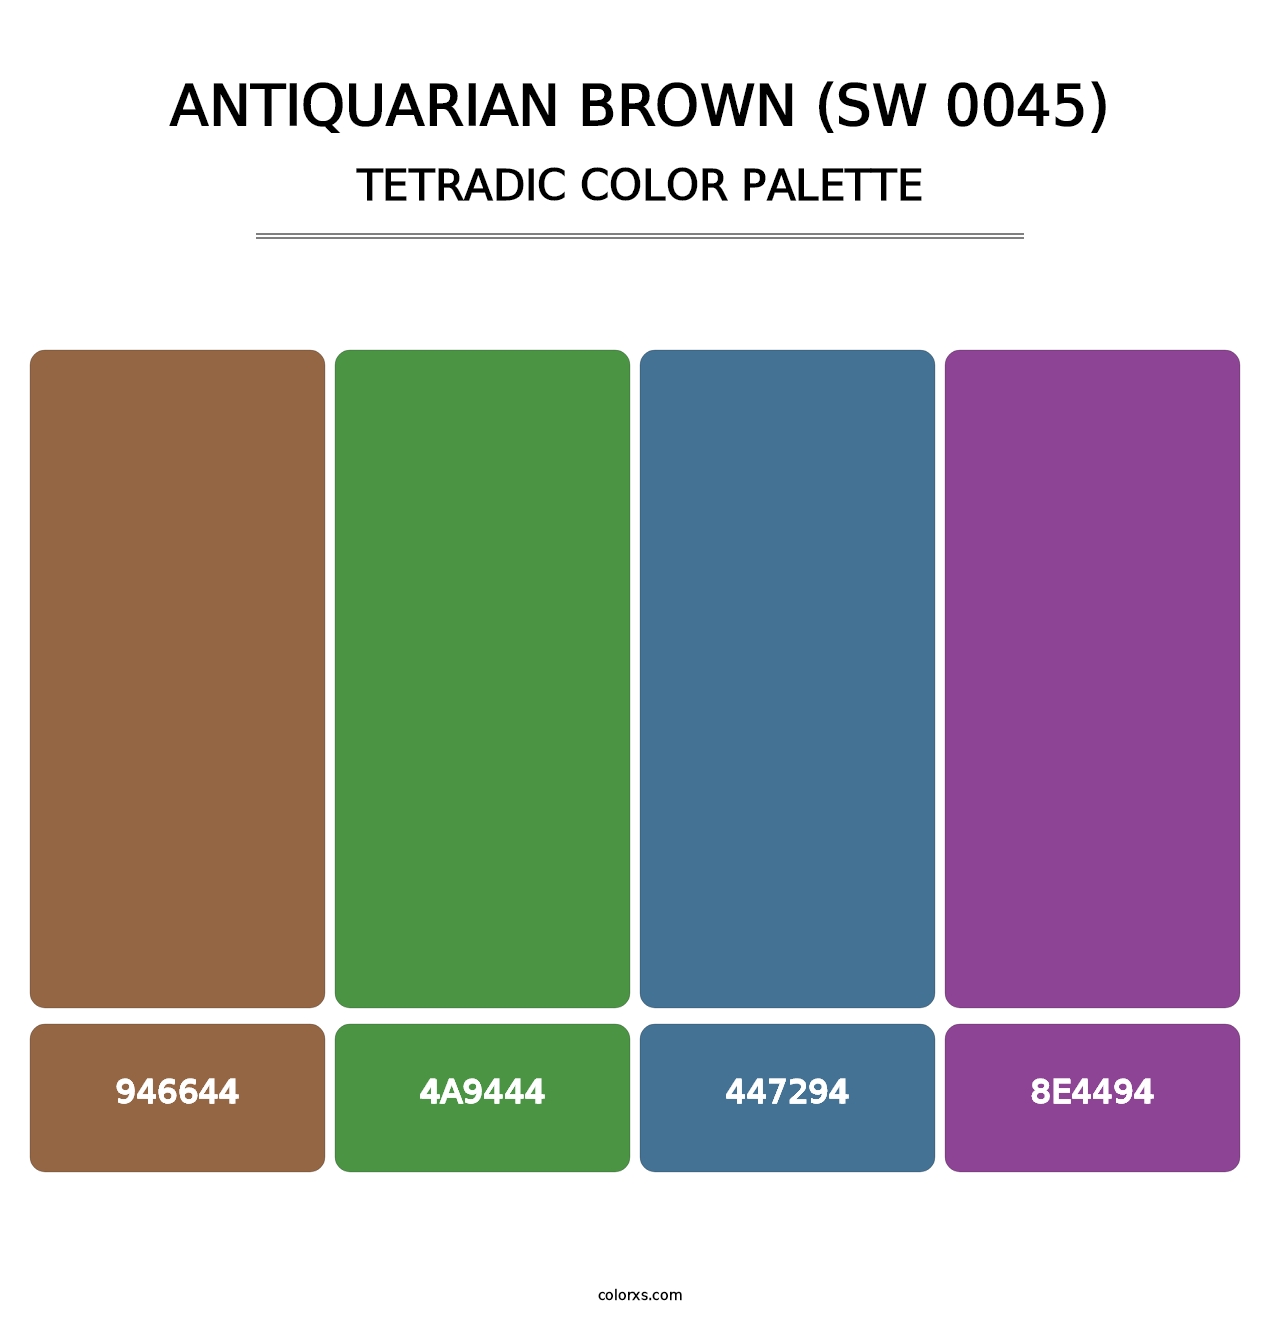 Antiquarian Brown (SW 0045) - Tetradic Color Palette